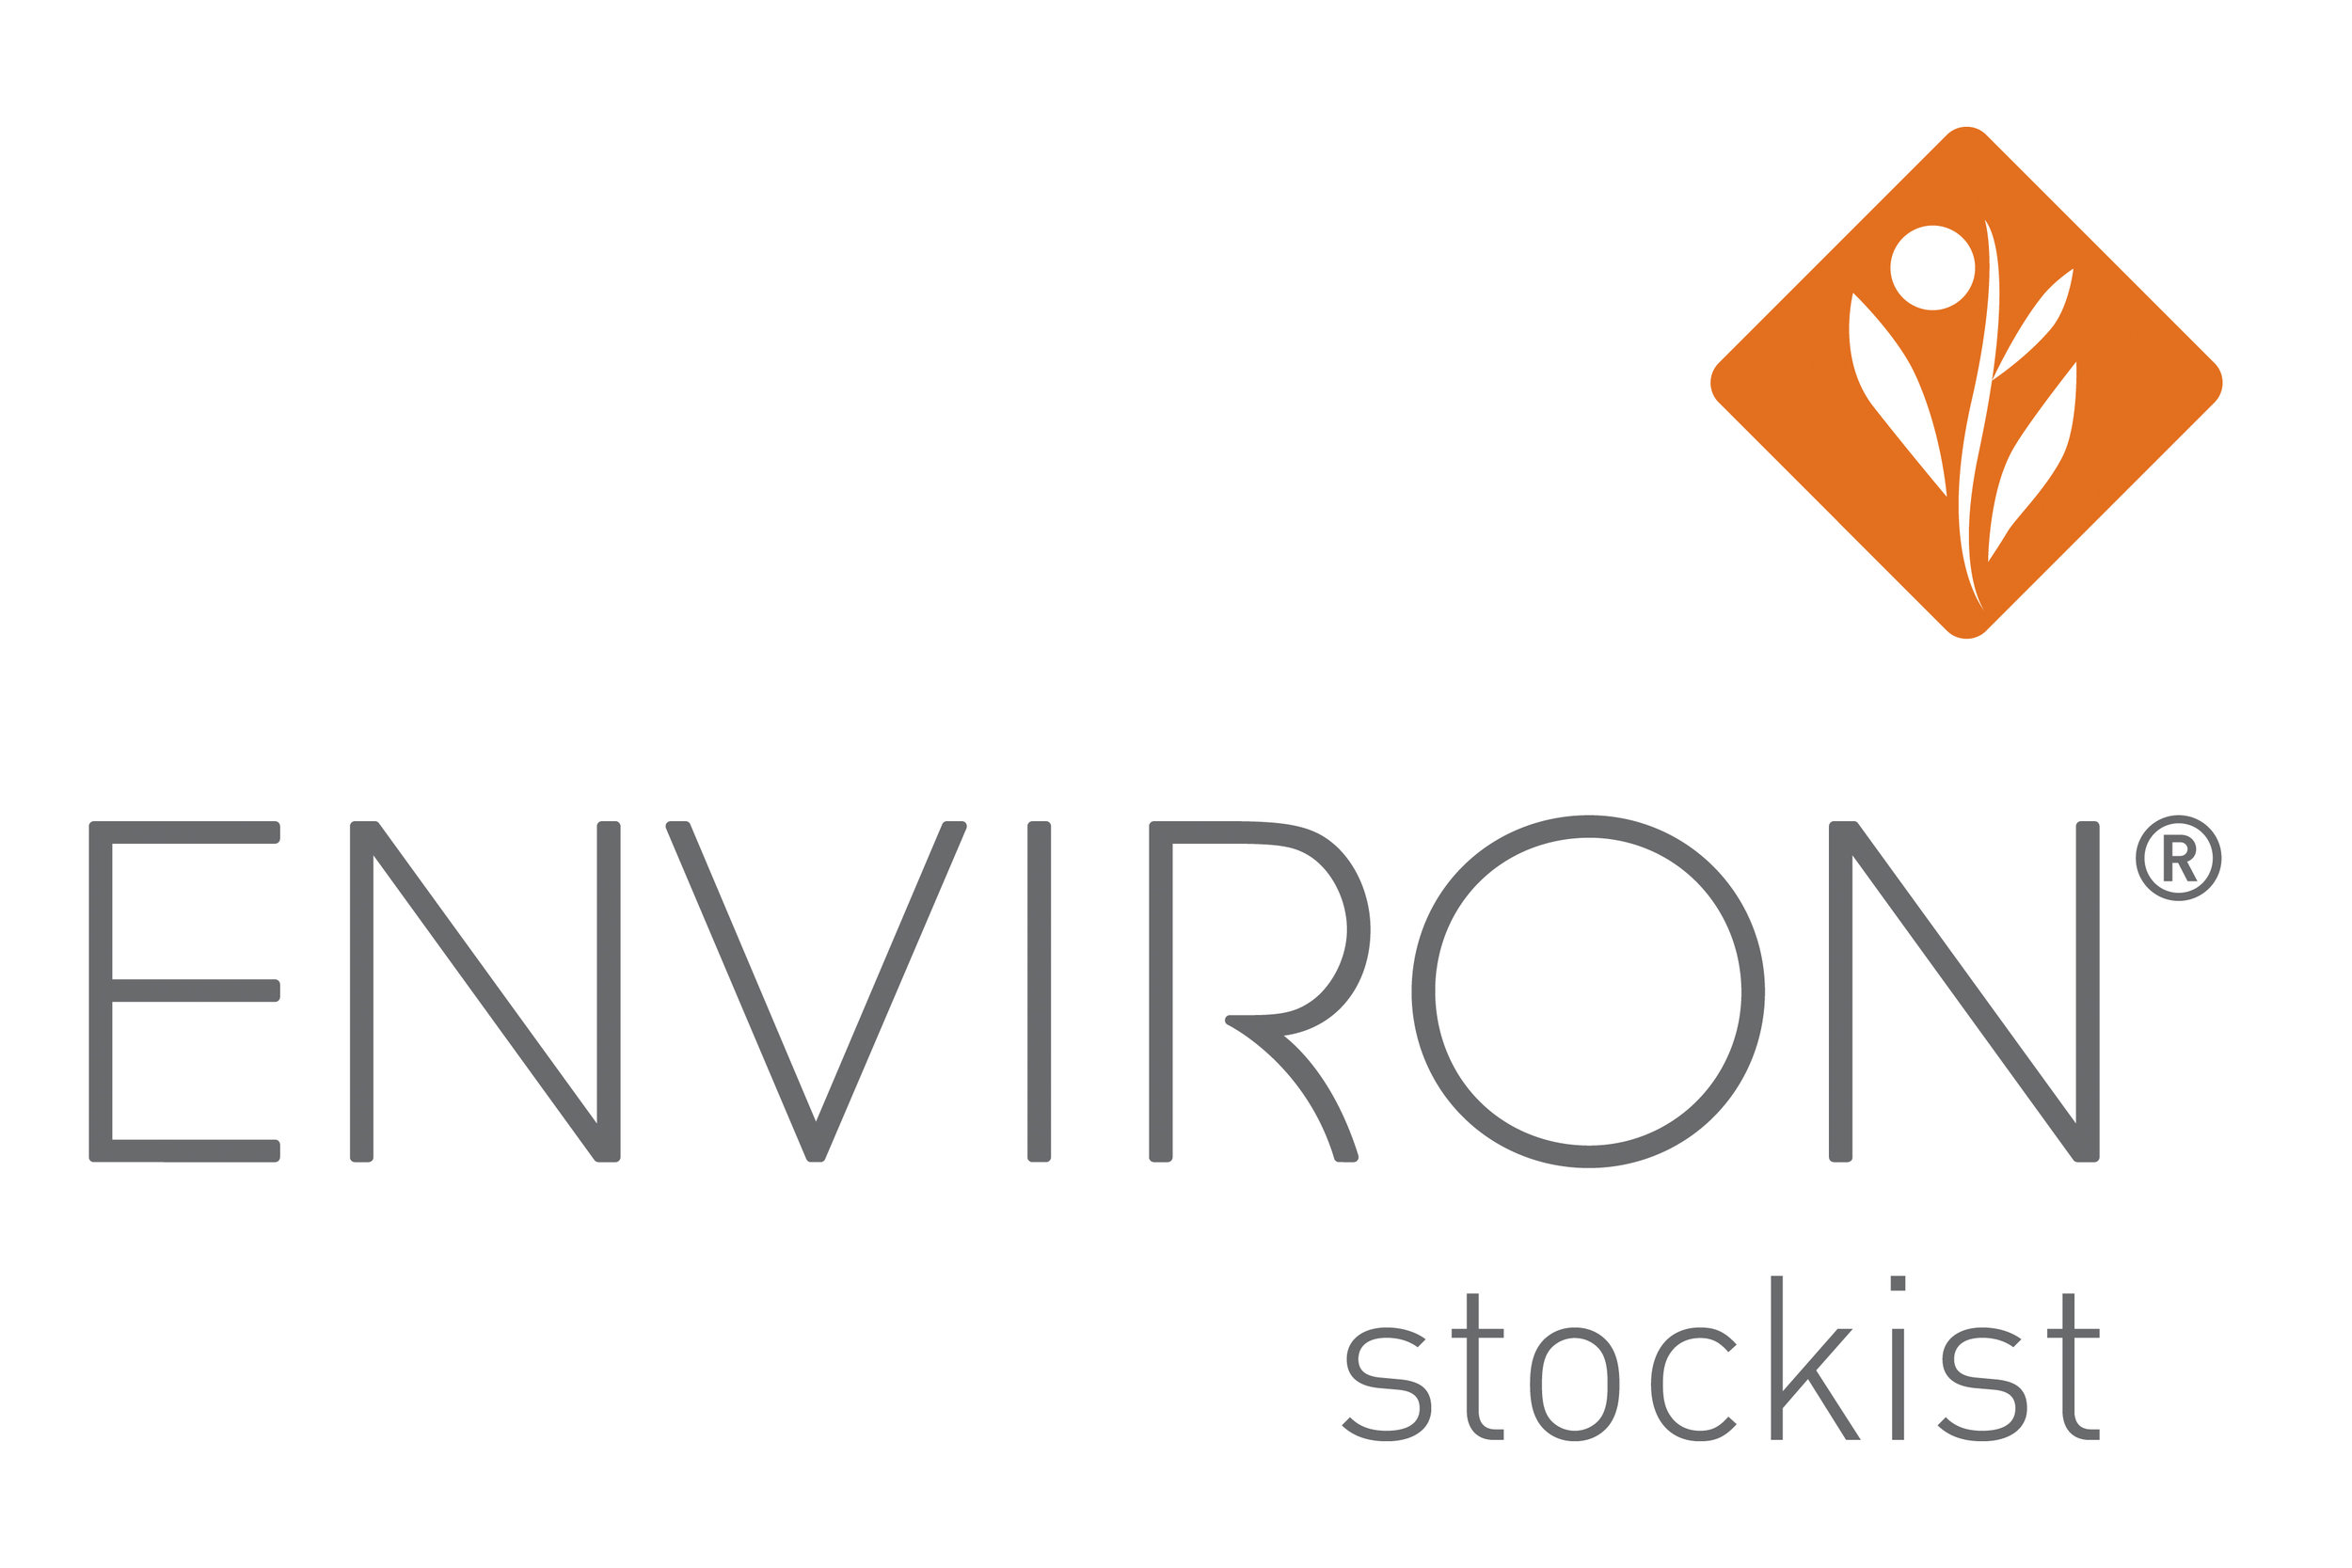 Environ Stockist logo + R.jpg